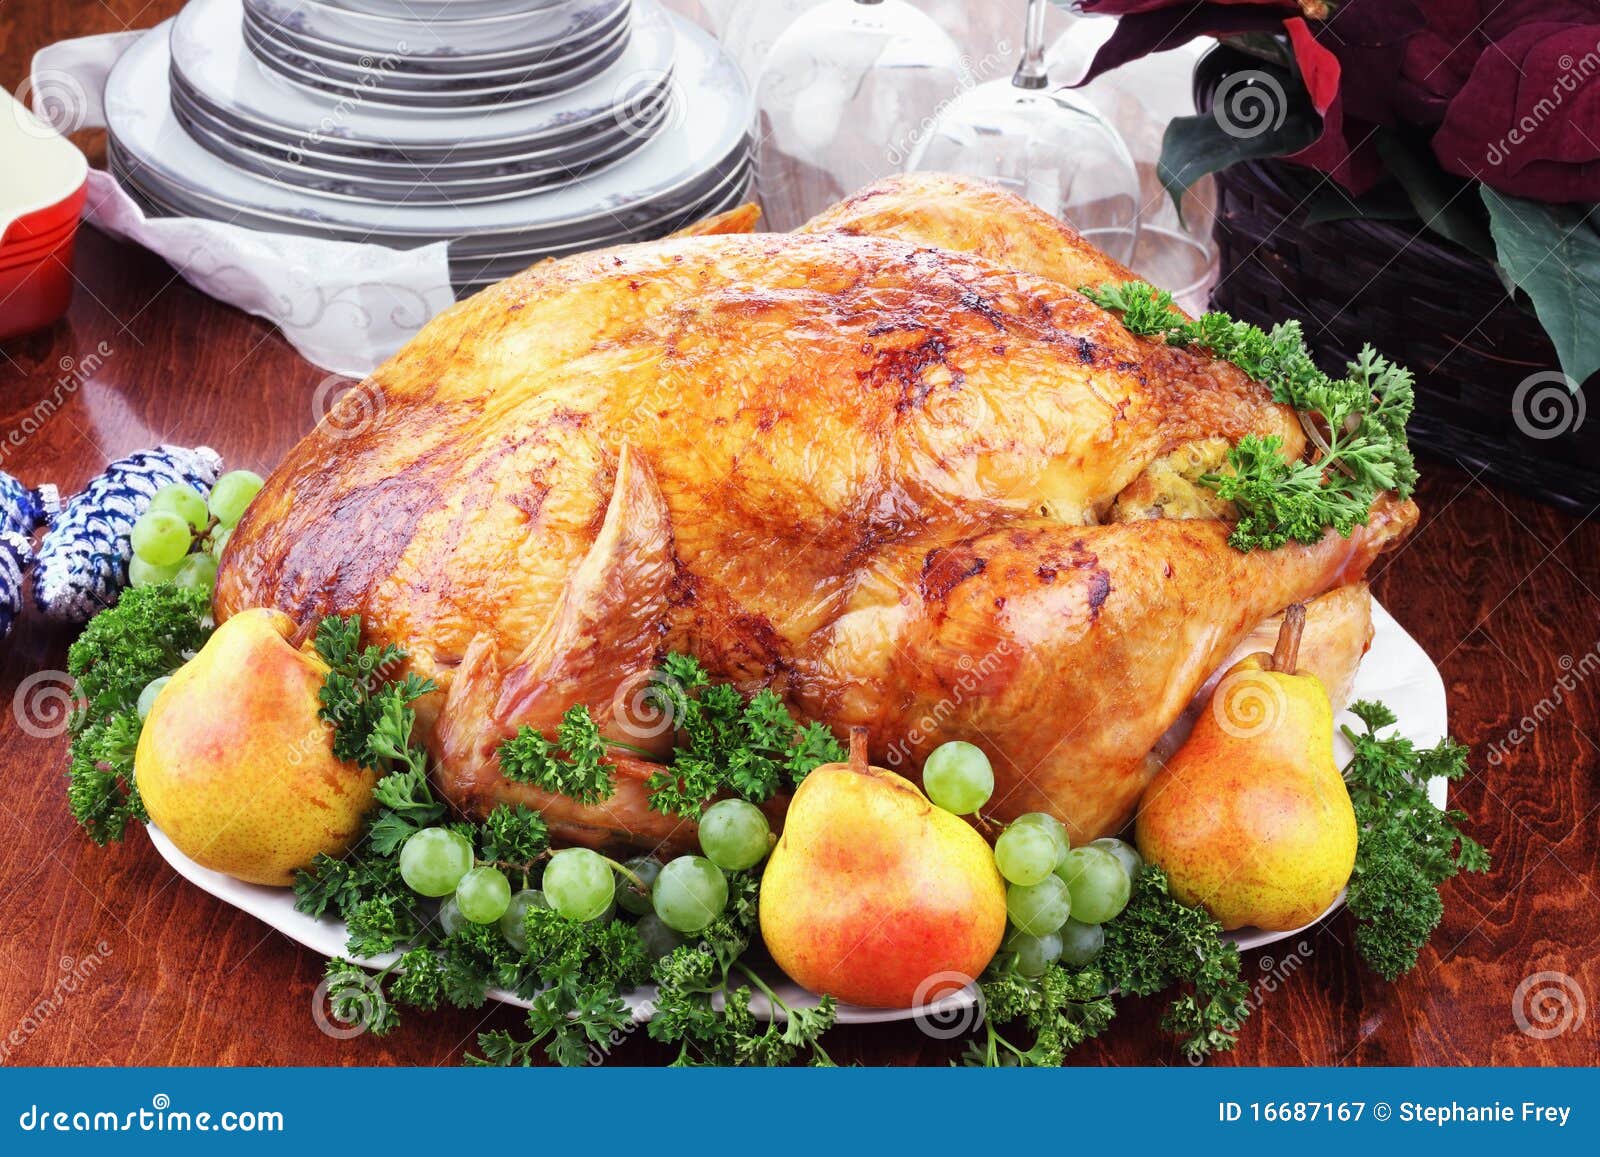 Christmas Turkey Dinner Royalty Free Stock Photography - Image: 16687167